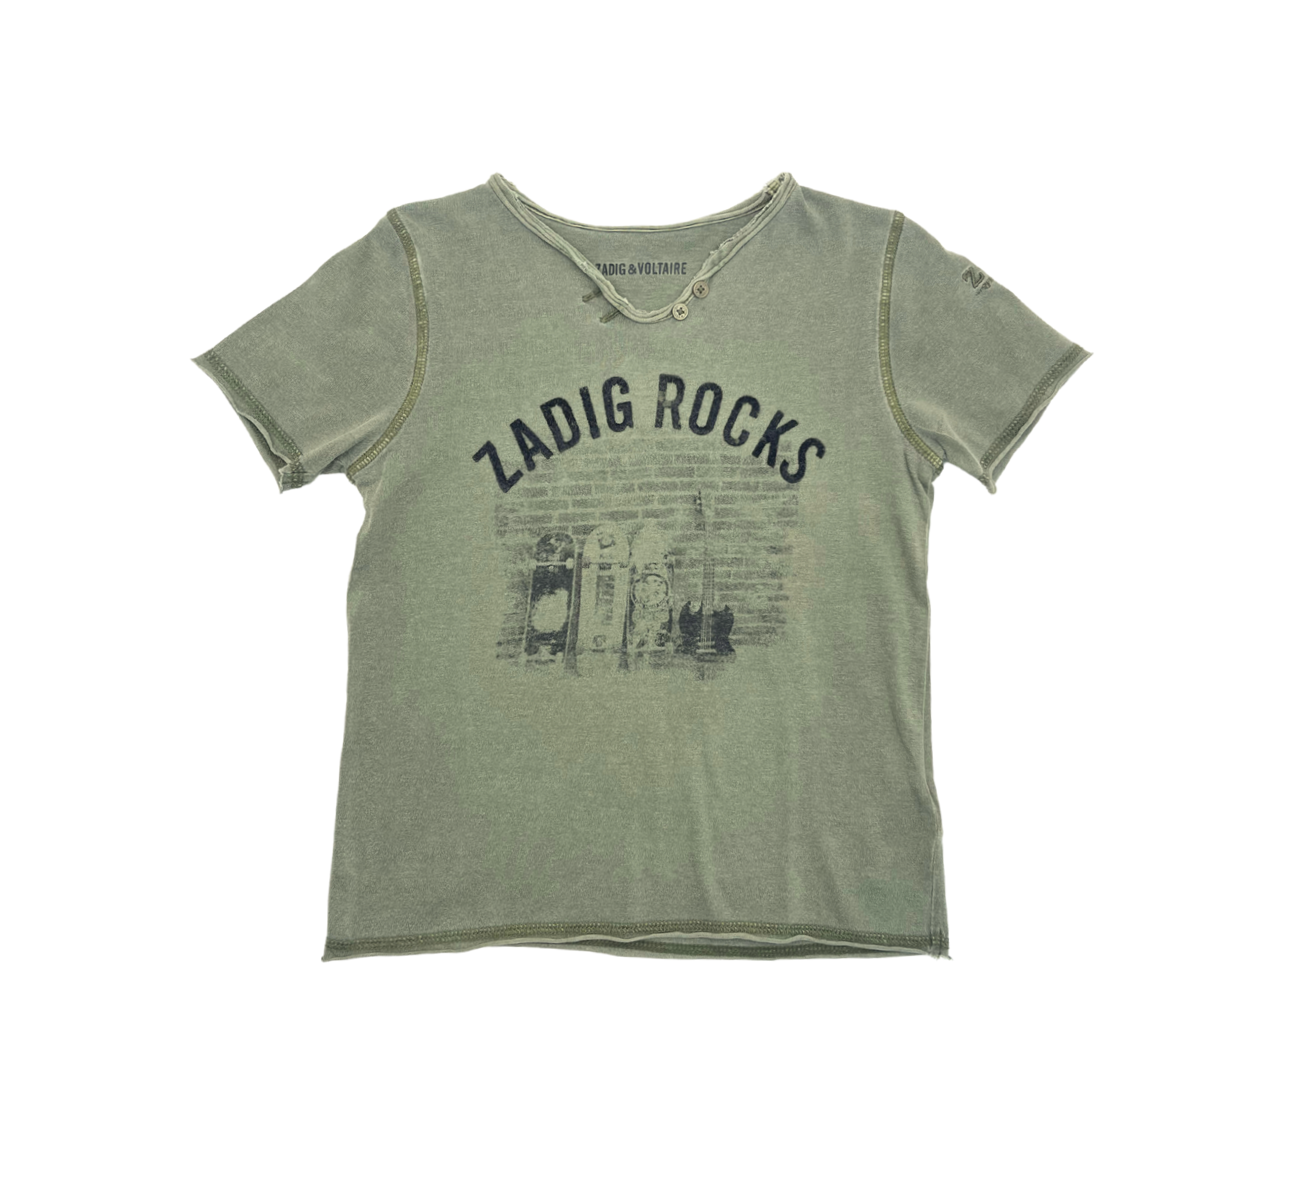 ZADIG ET VOLTAIRE - T shirt kaki "Zadig Rocks" - 5 ans